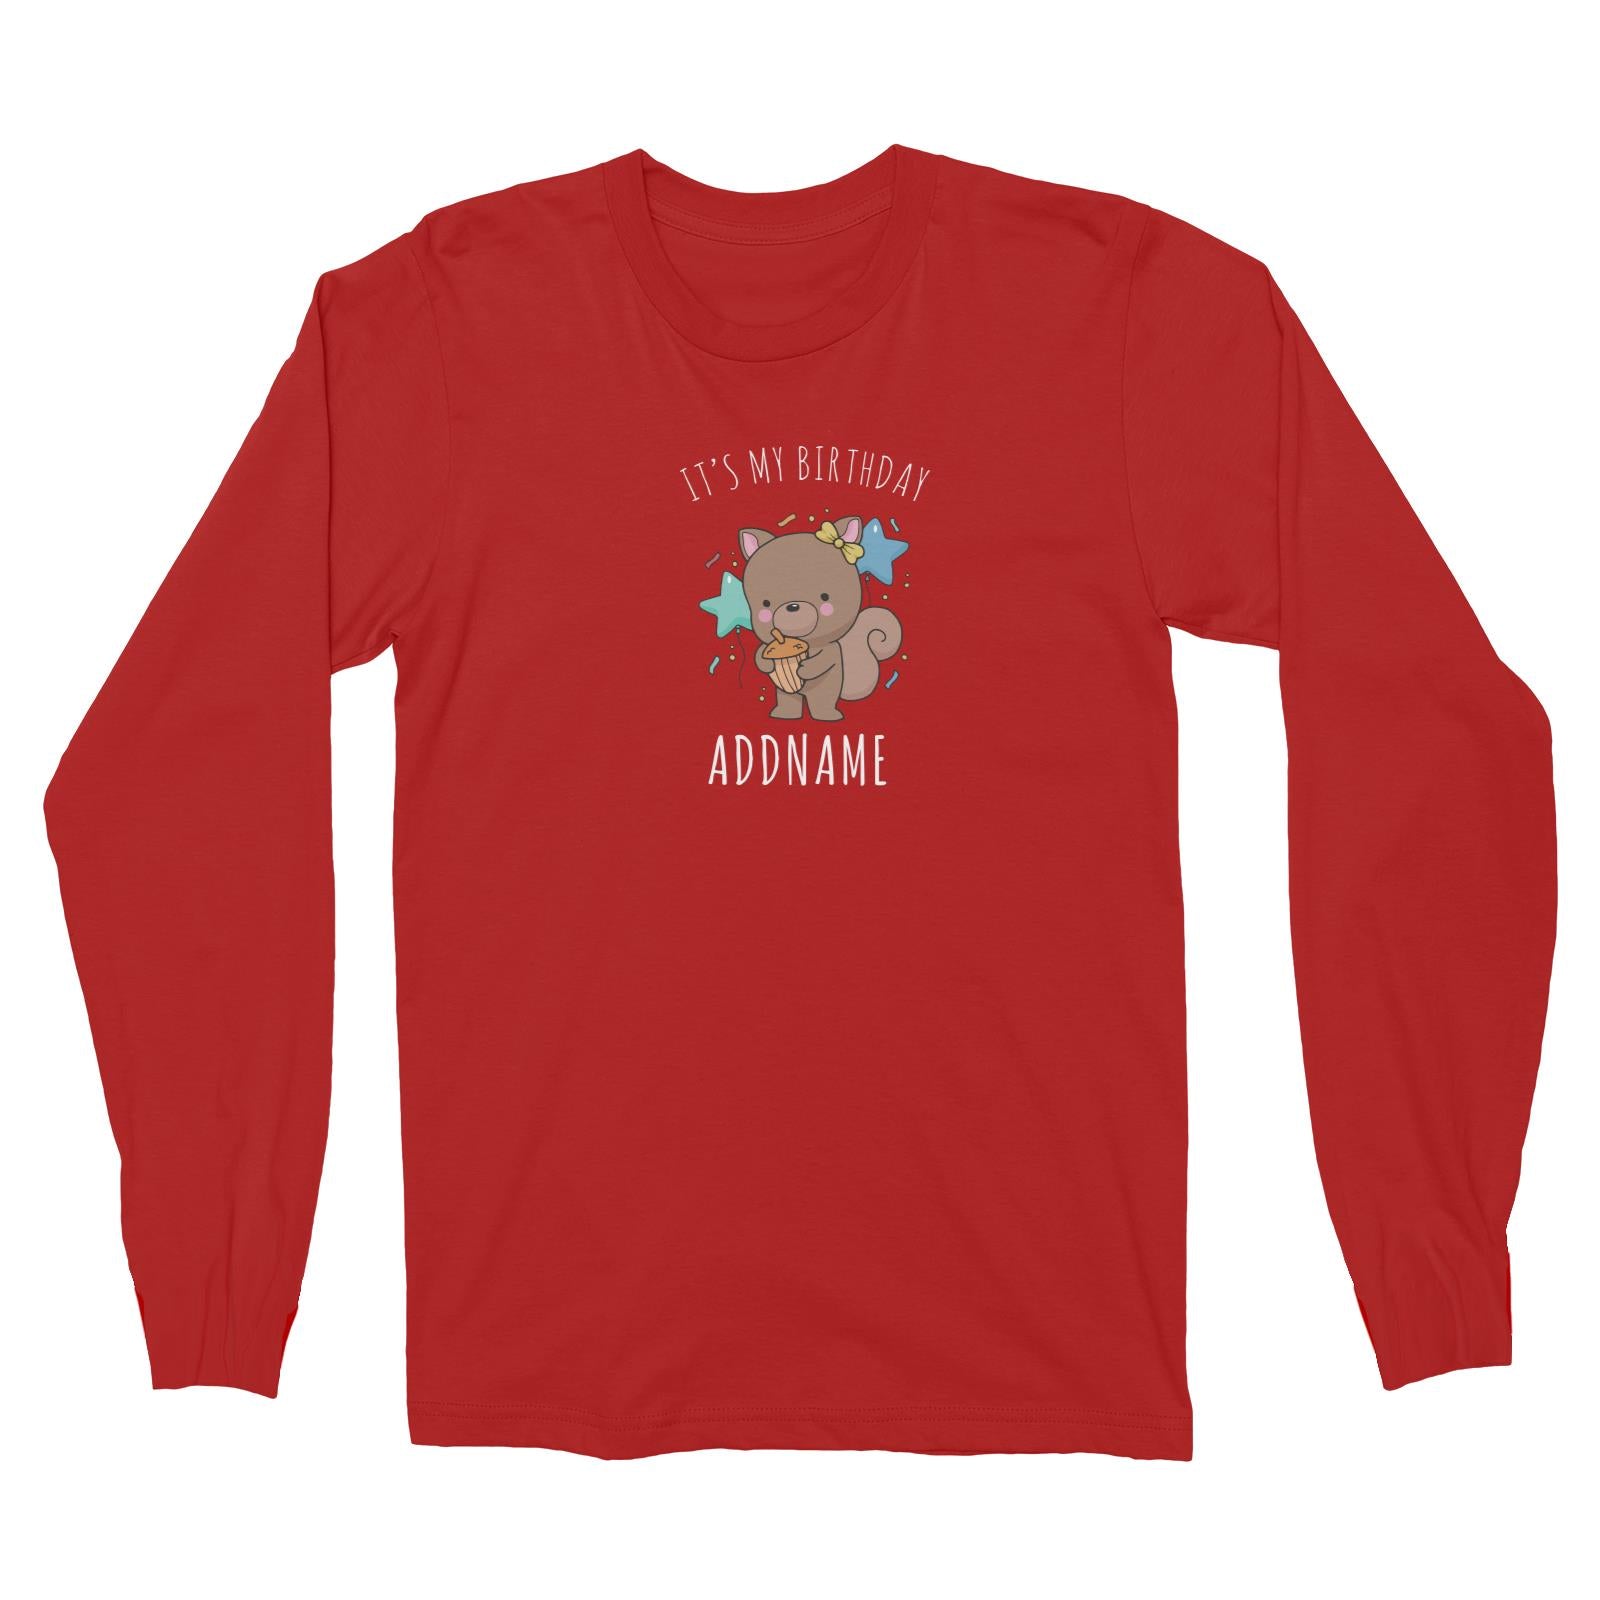 Birthday Sketch Animals Squirrel with Acorn It's My Birthday Addname Long Sleeve Unisex T-Shirt